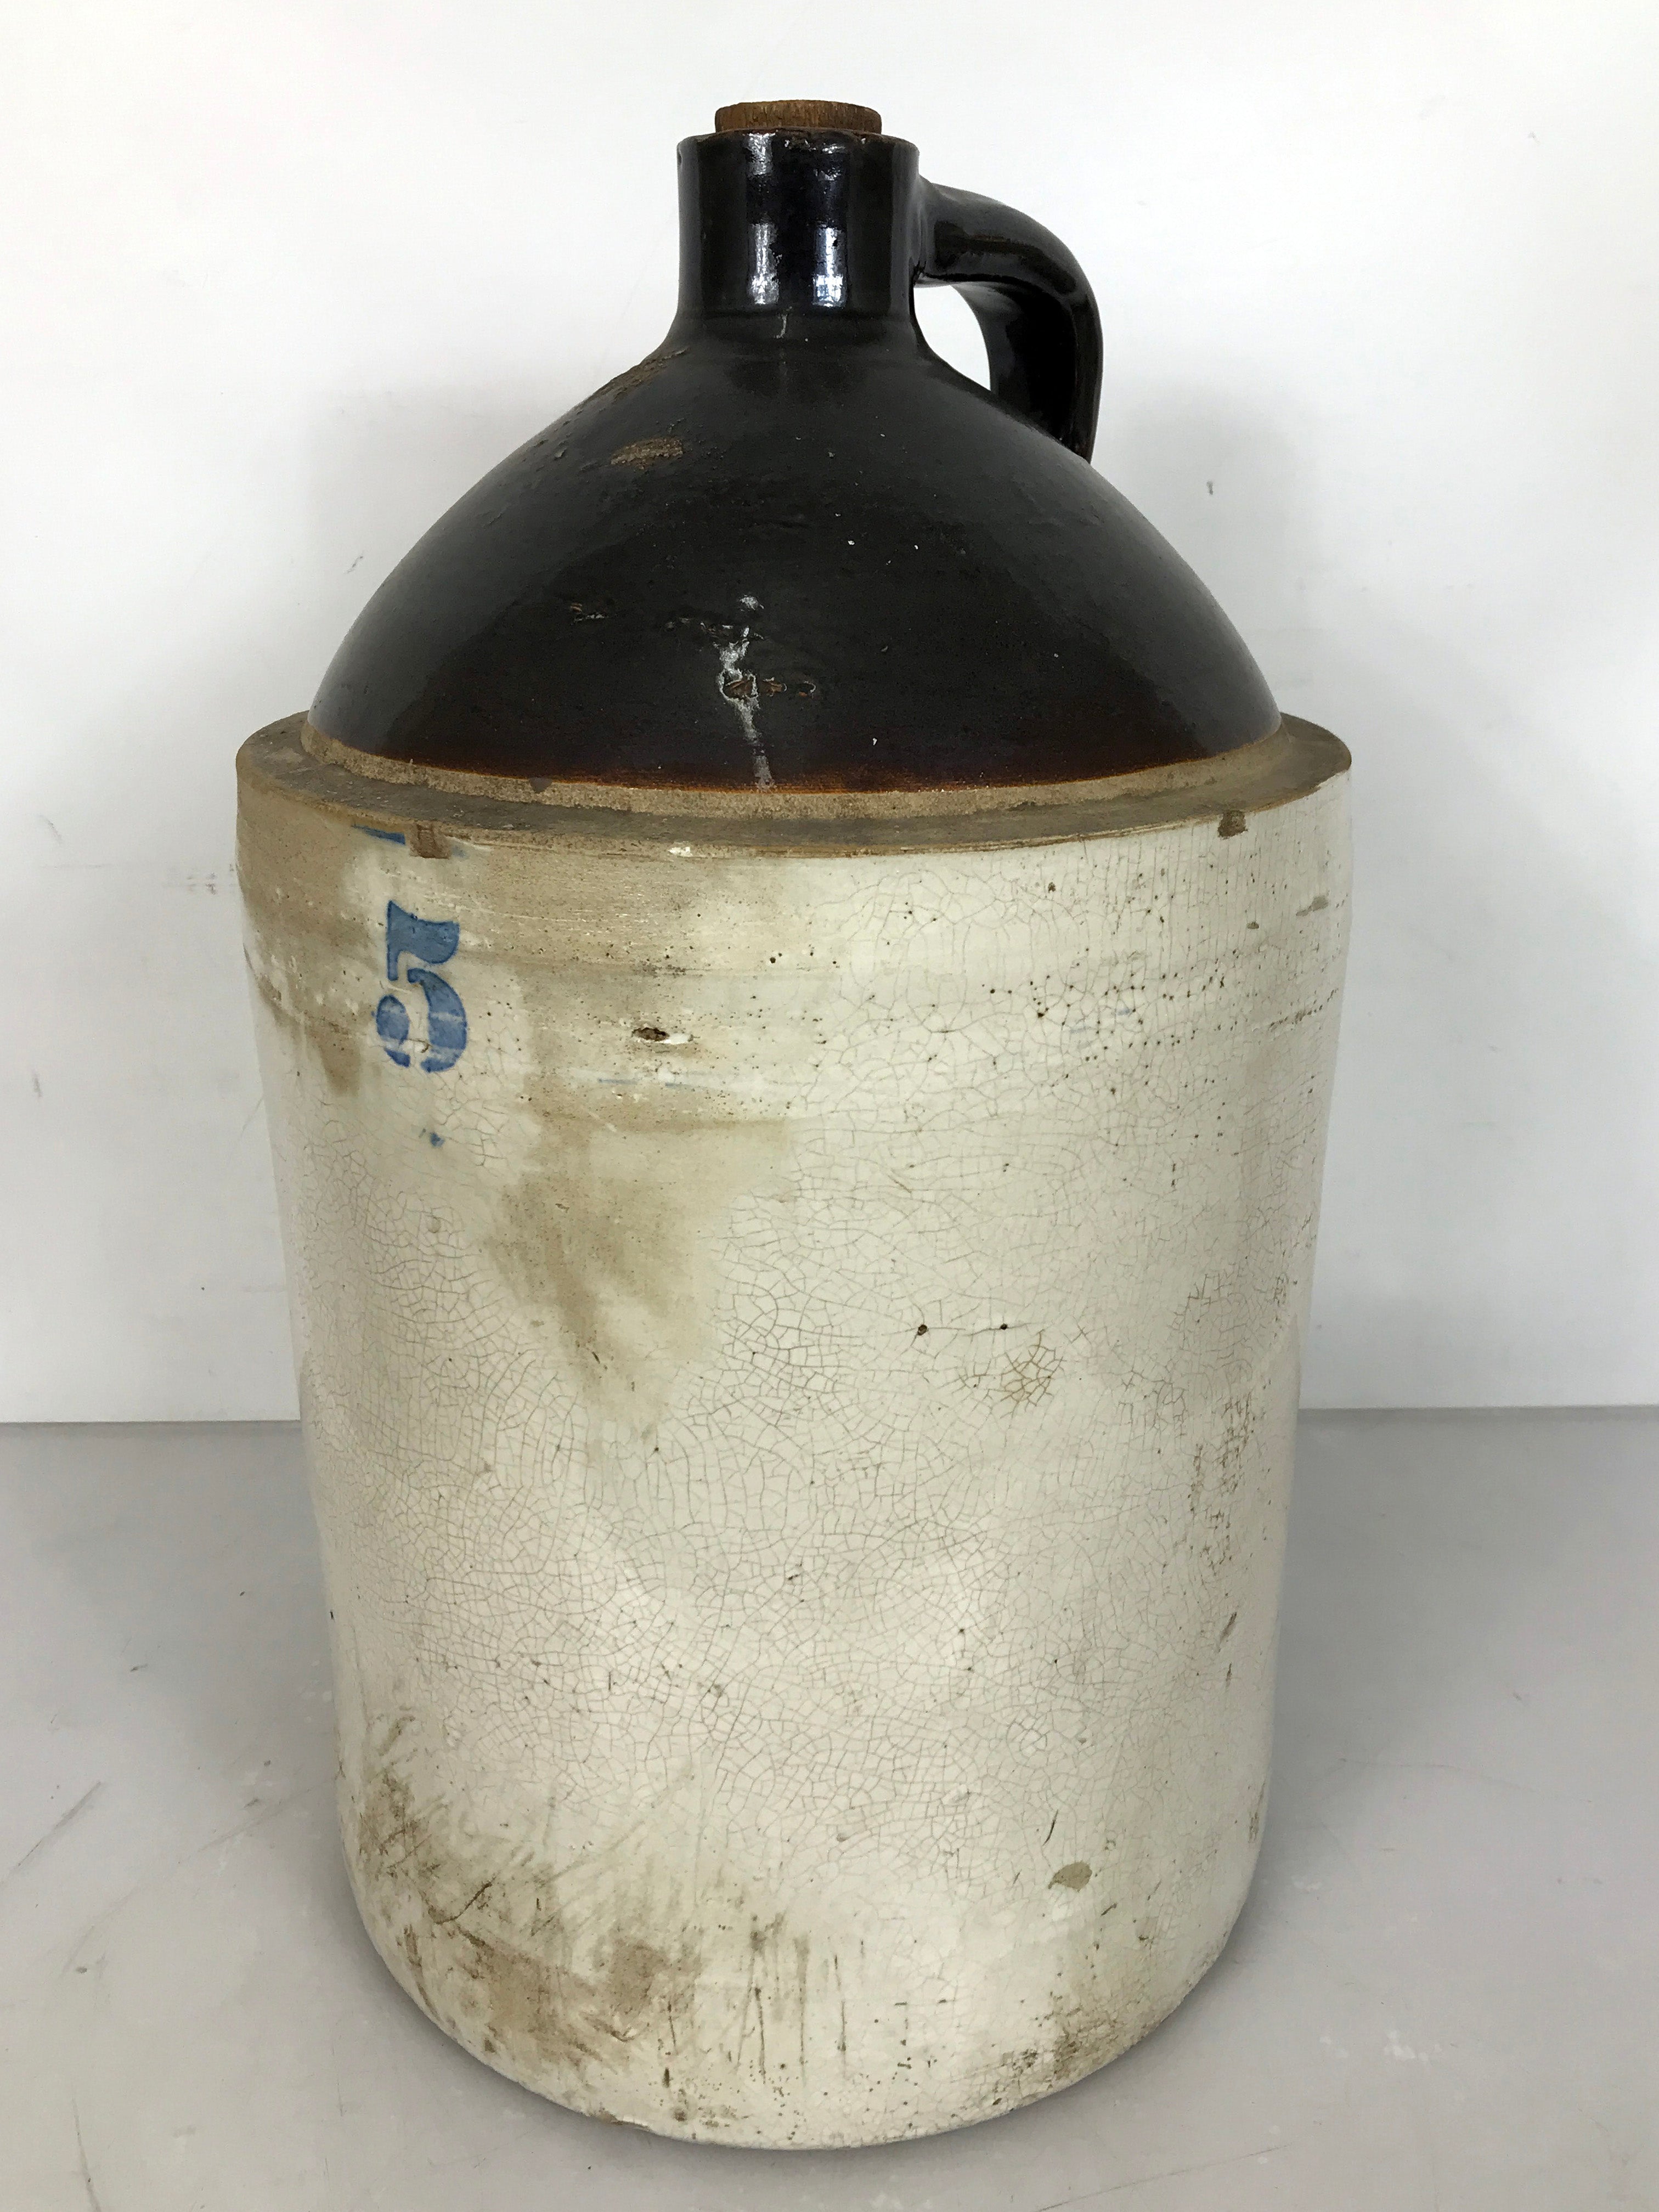 Antique 5 Gallon Stoneware Pottery Shoulder Jug with Two Tone Color